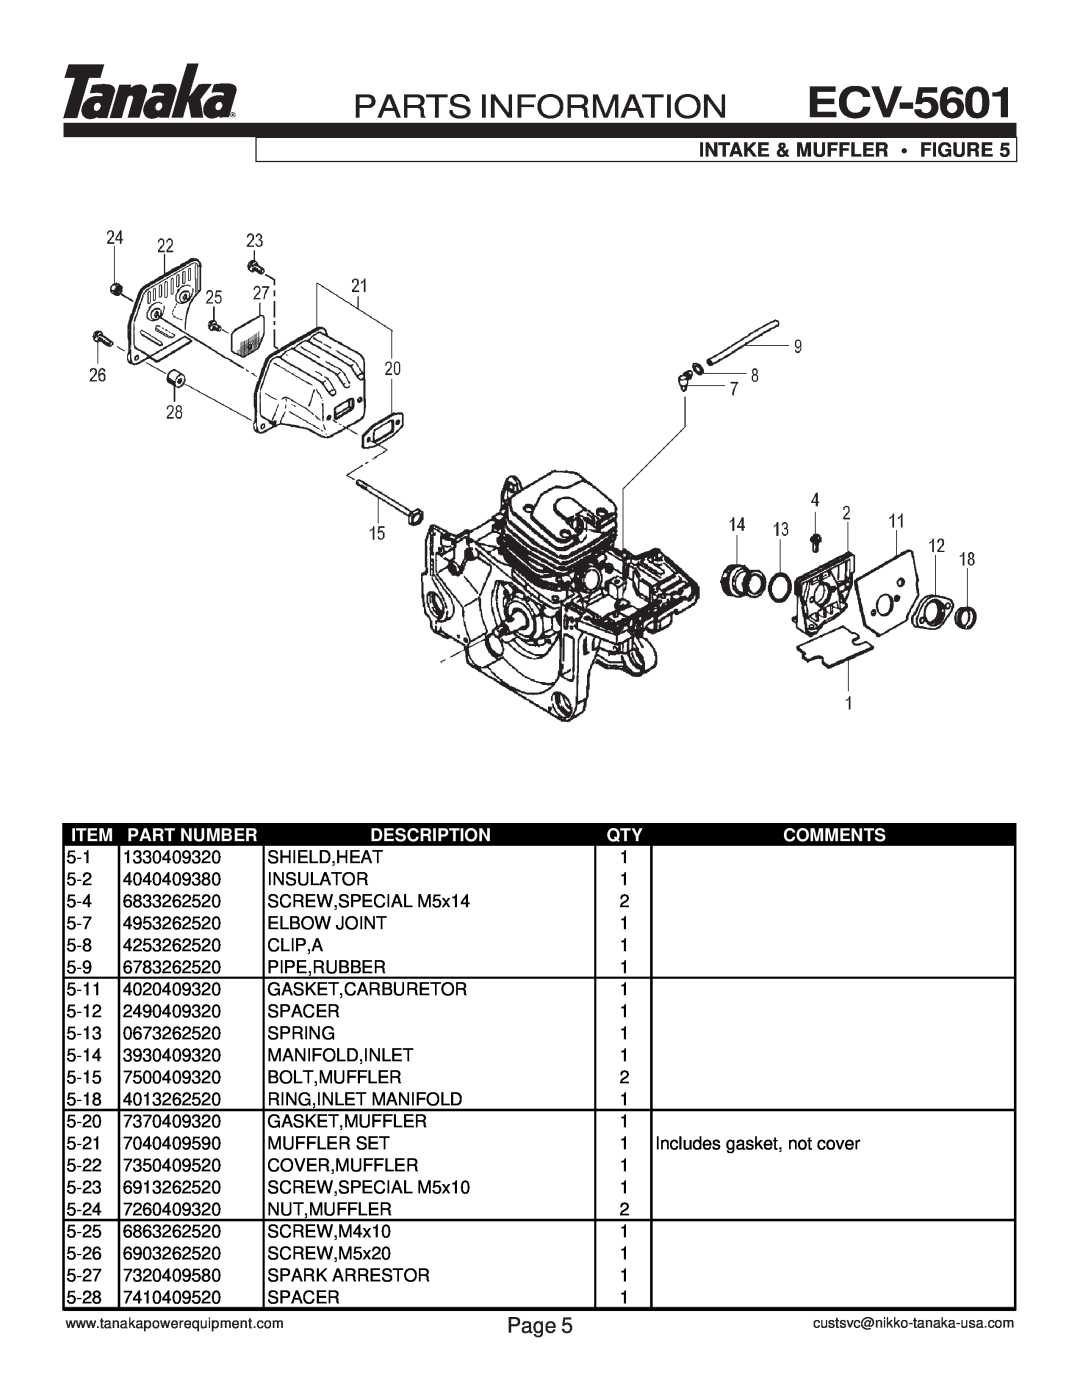 Tanaka manual Intake & Muffler Figure, PARTS INFORMATION ECV-5601, Page, Part Number, Description, Comments 